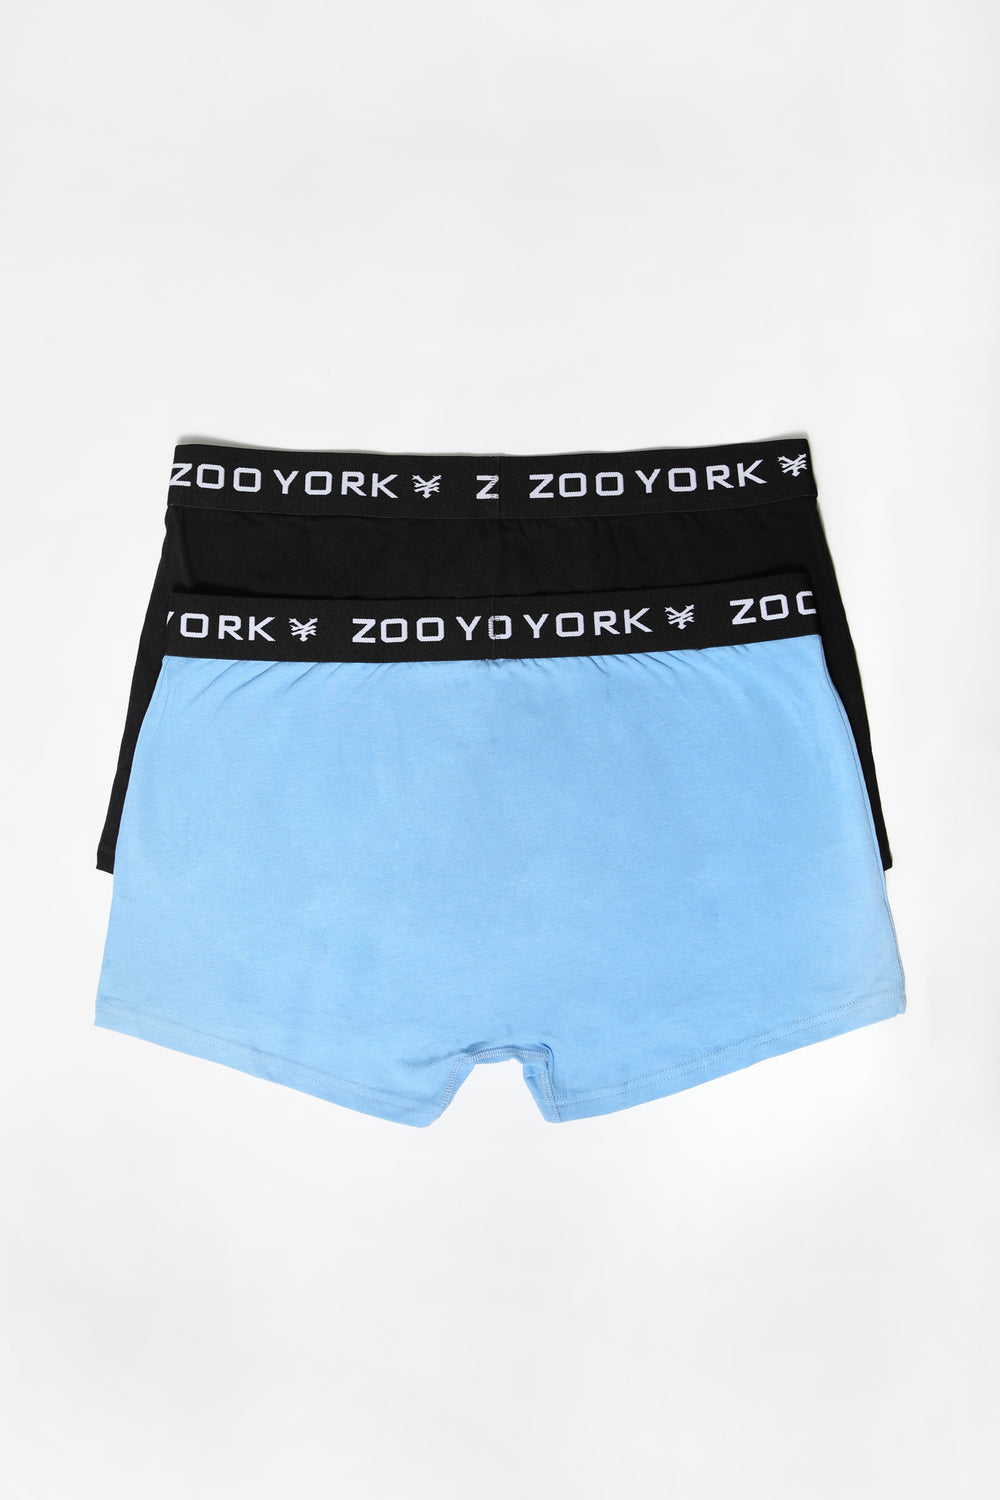 Zoo York Mens 2-Pack Boxer Briefs Light Blue